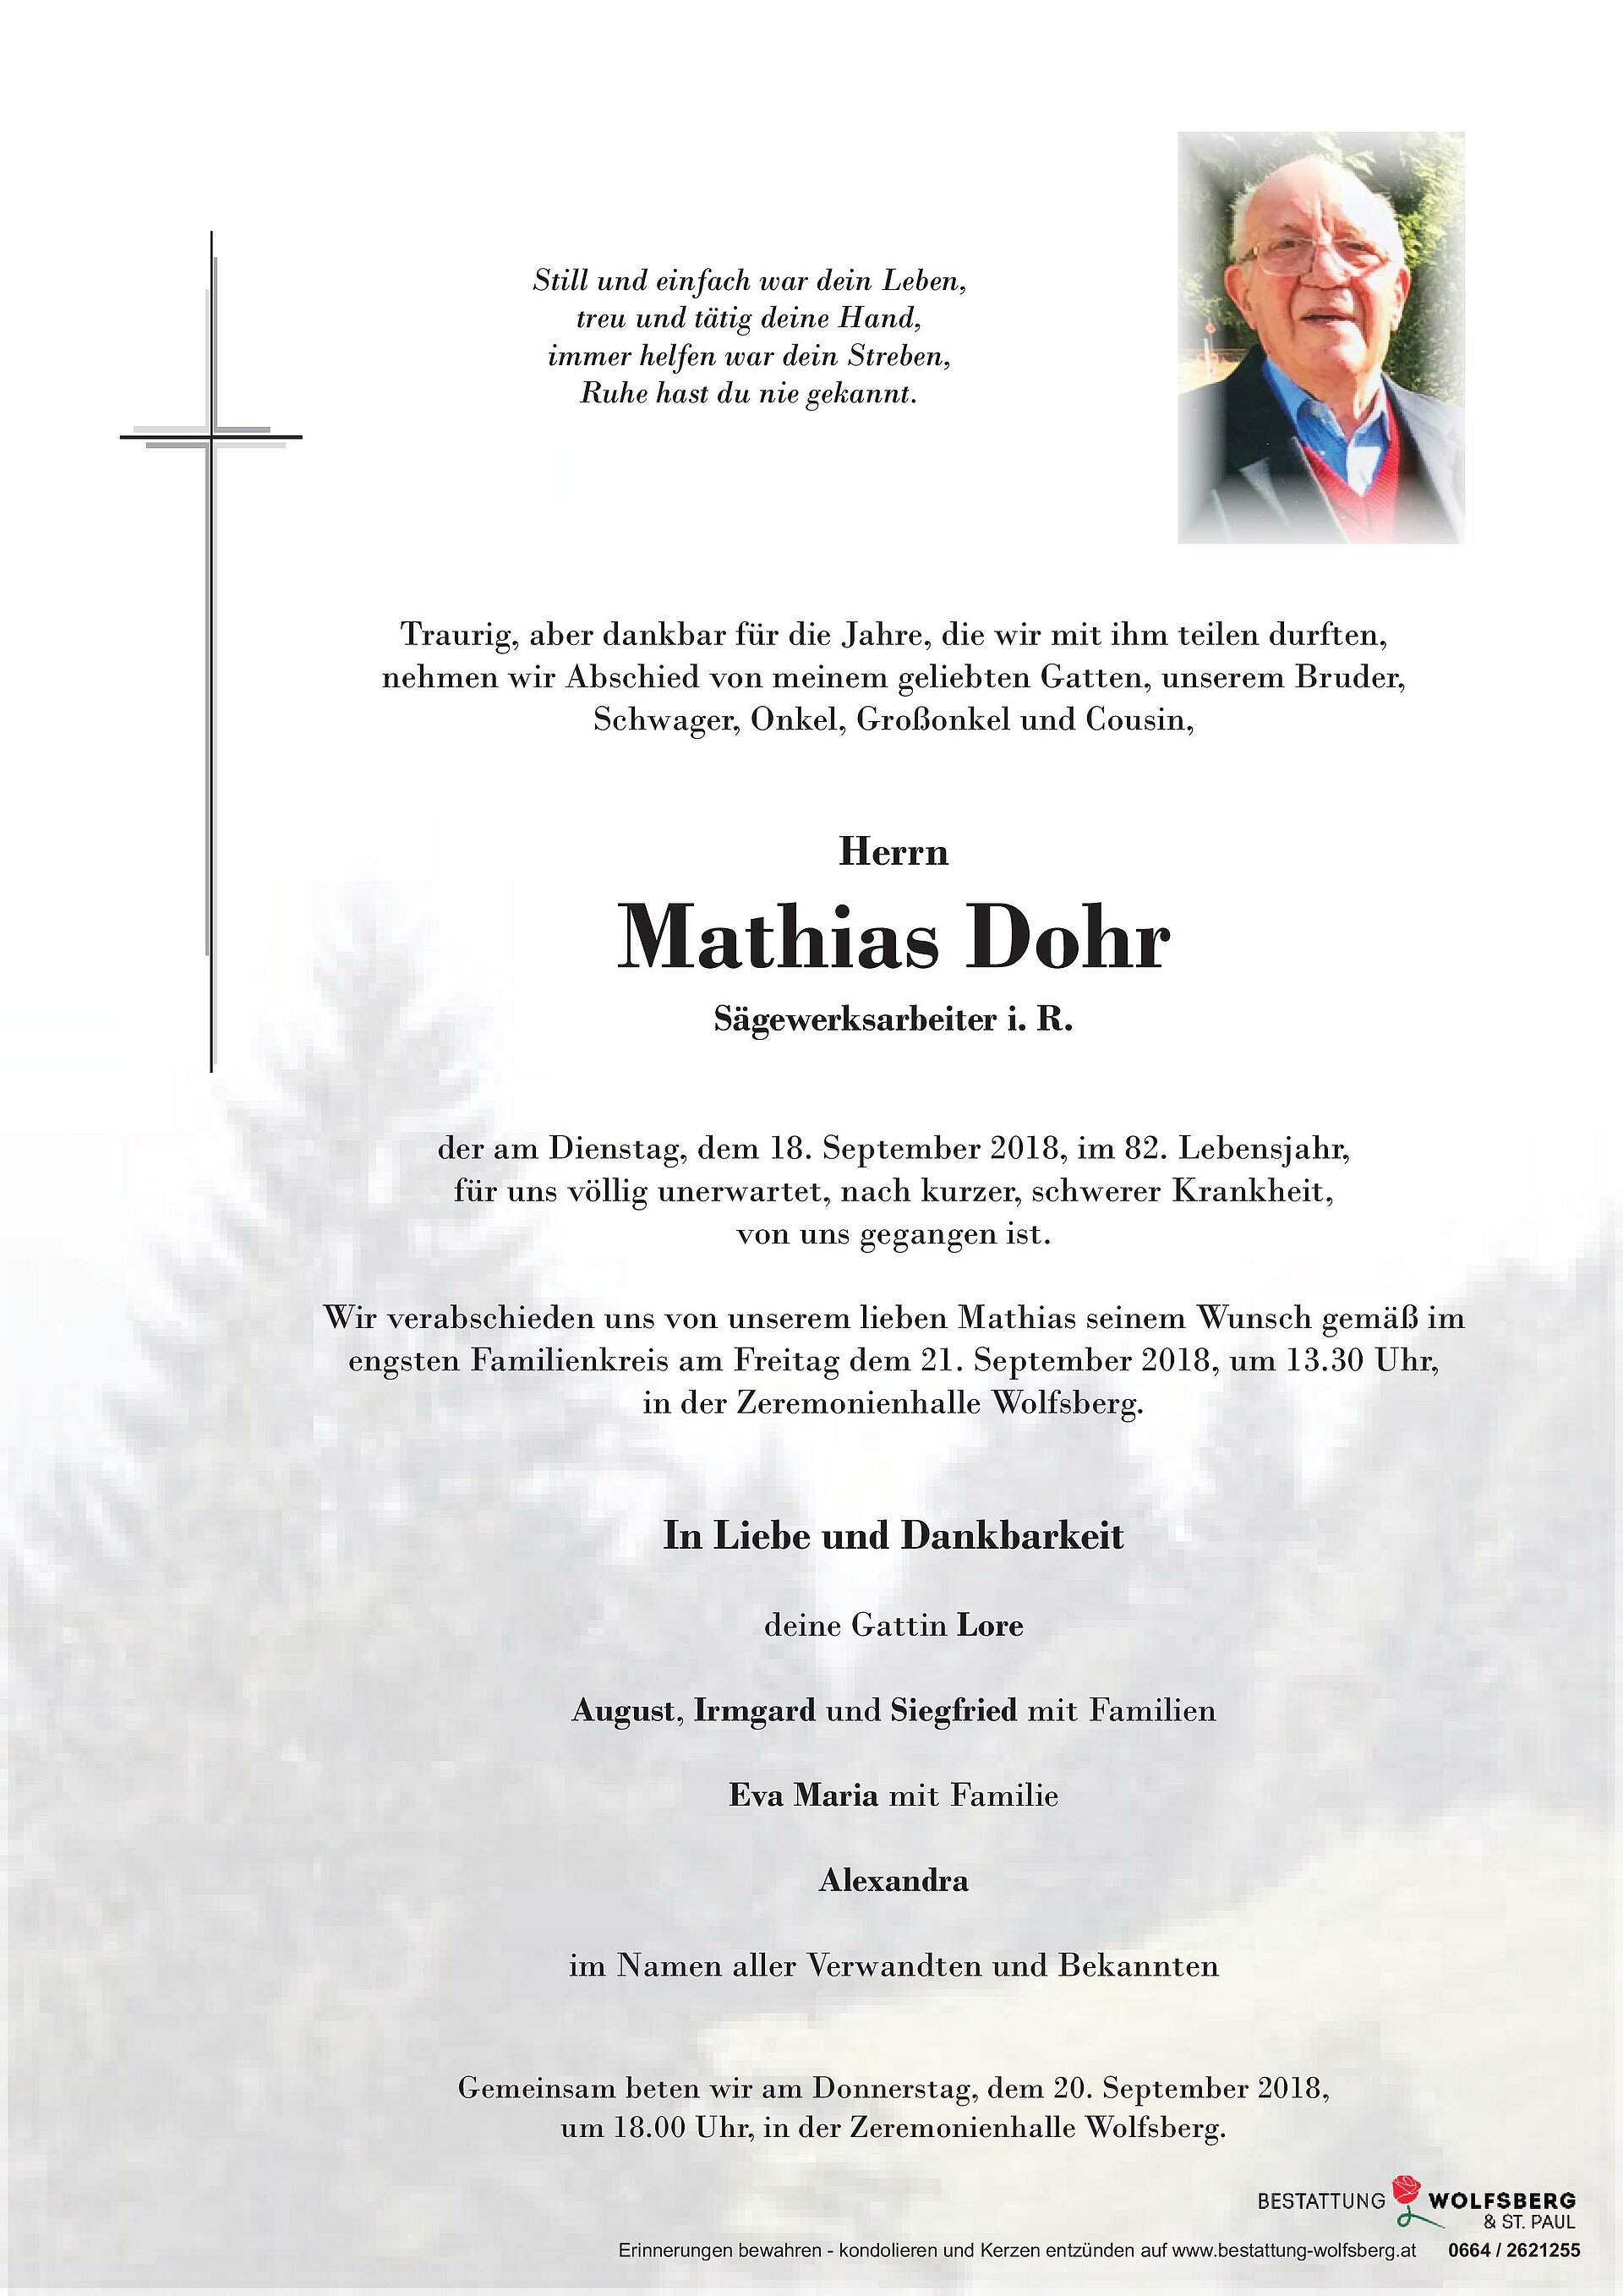 Mathias-Dohr-EP9042-page-001.jpg